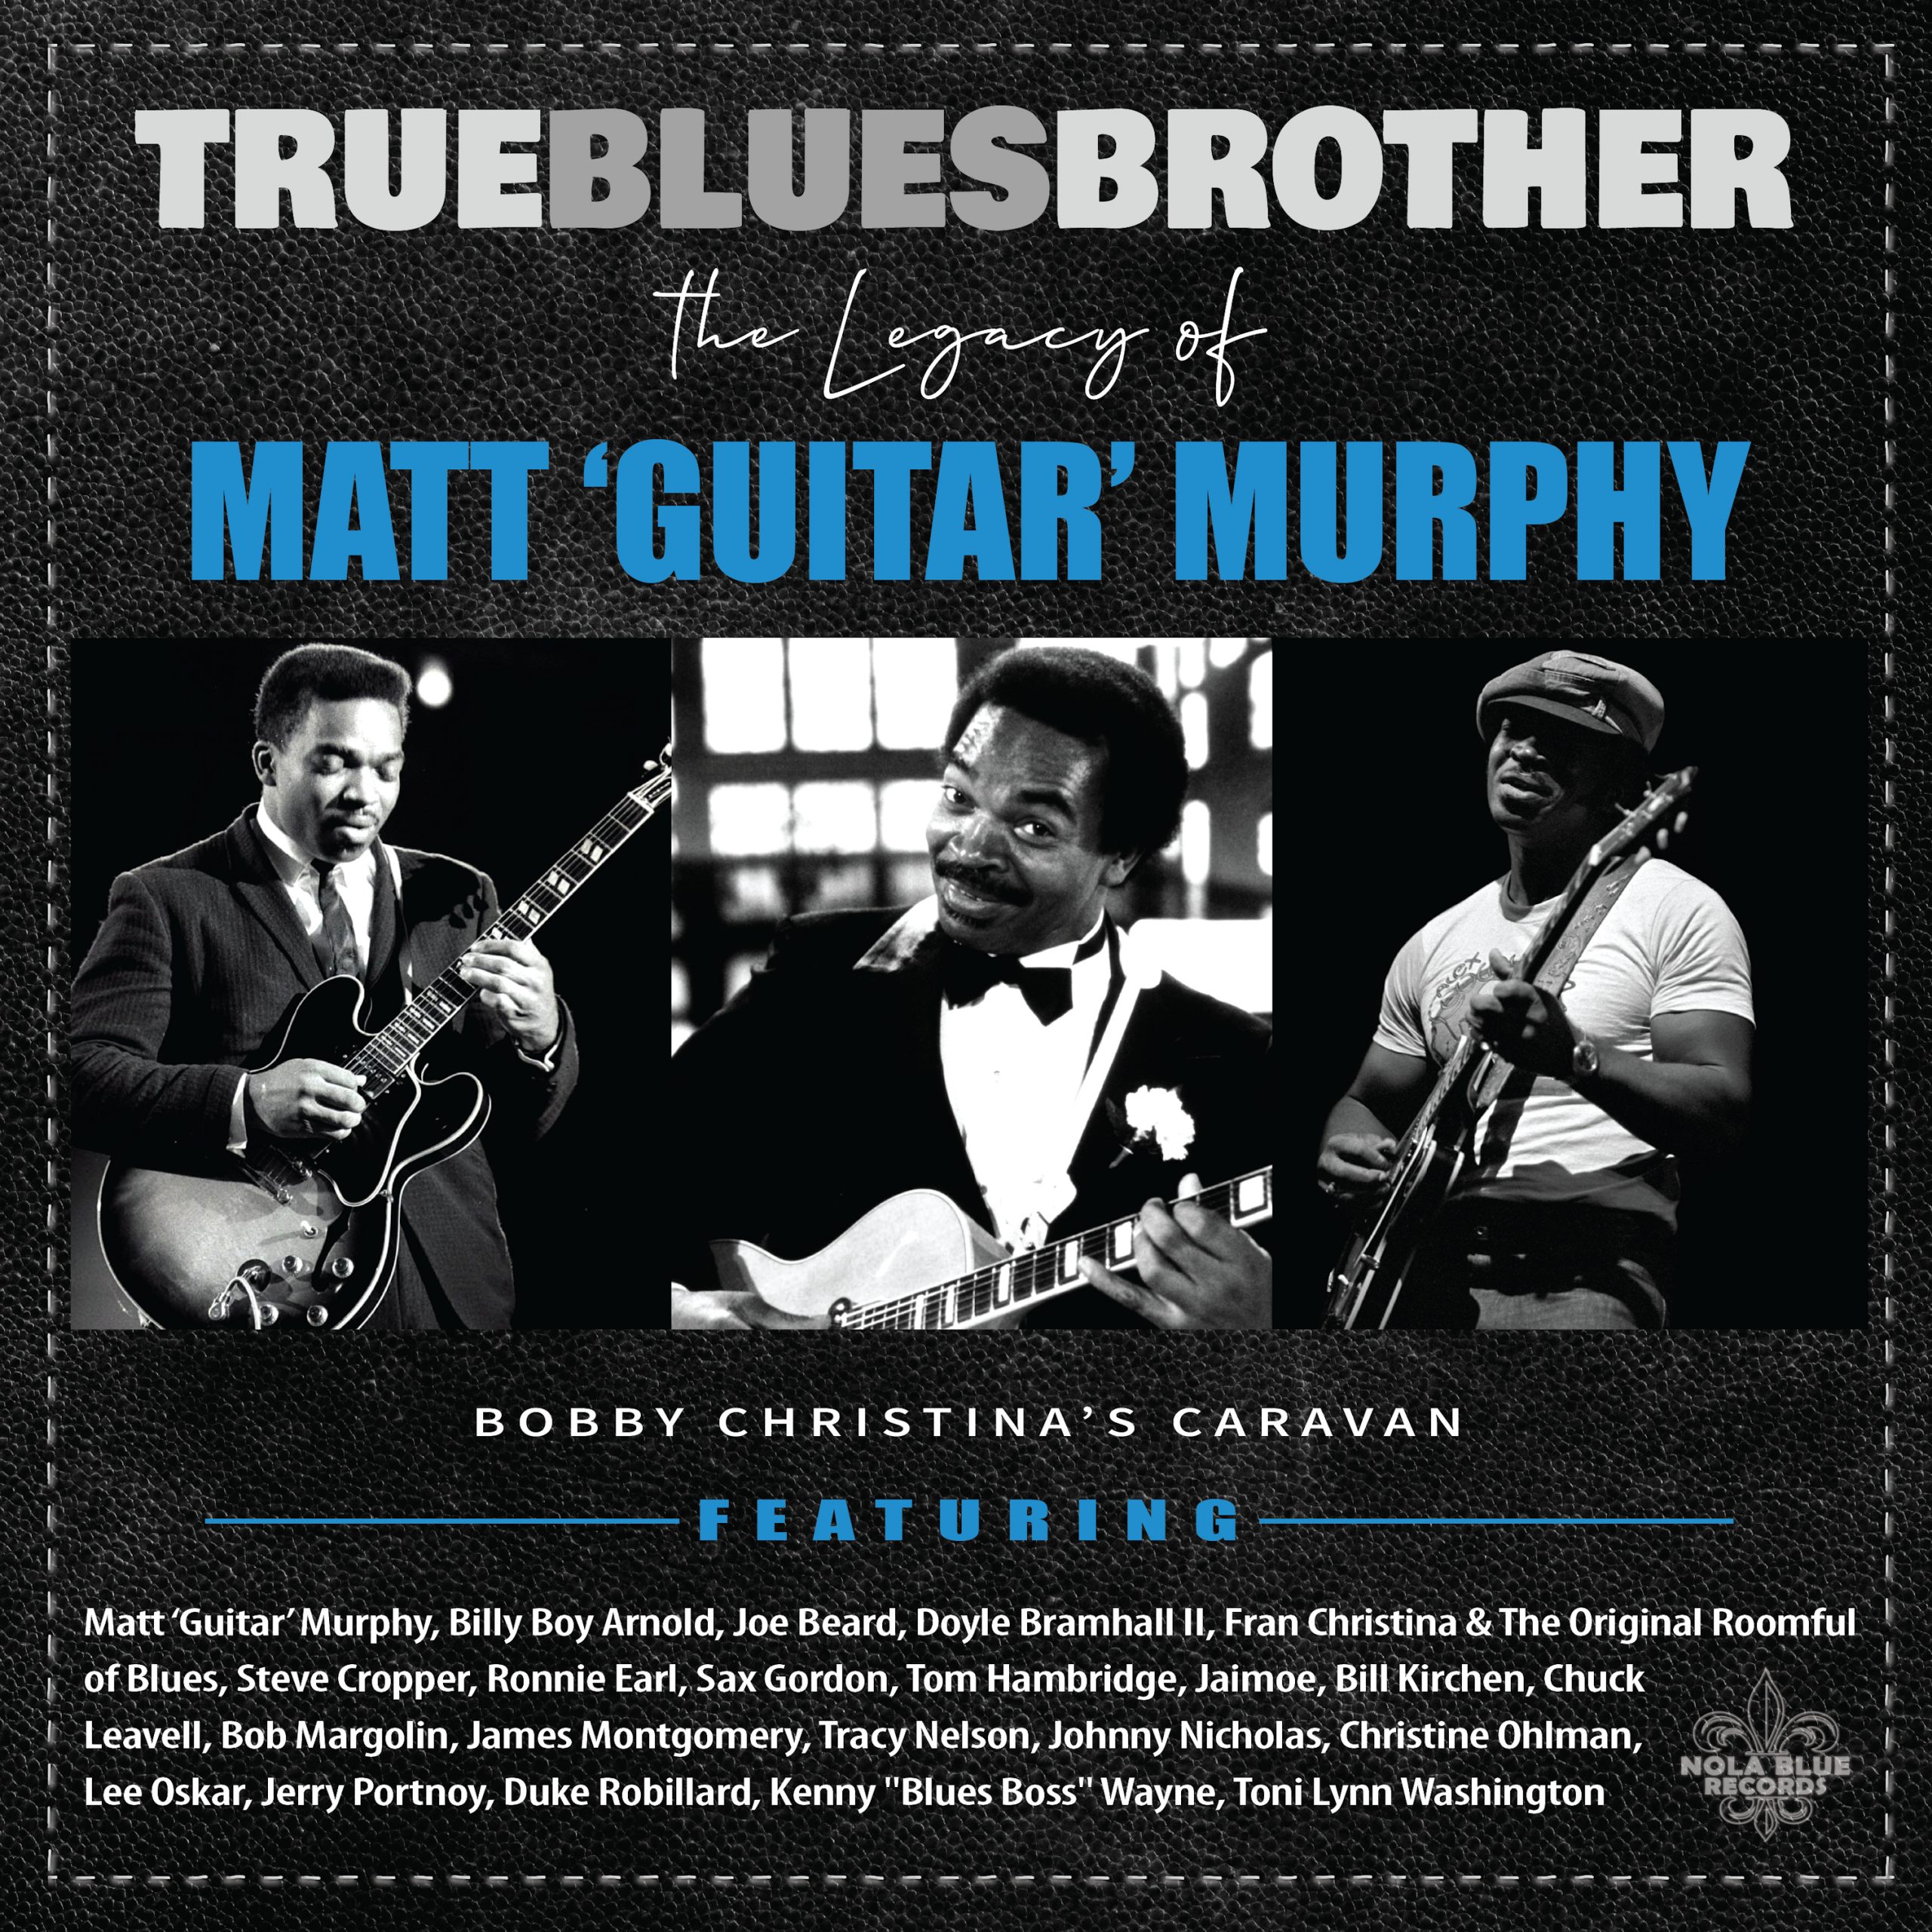 Nola Blue Records Sets June 21 Release for Double Album, True Blues Brother: The Legacy of Matt "Guitar" Murphy